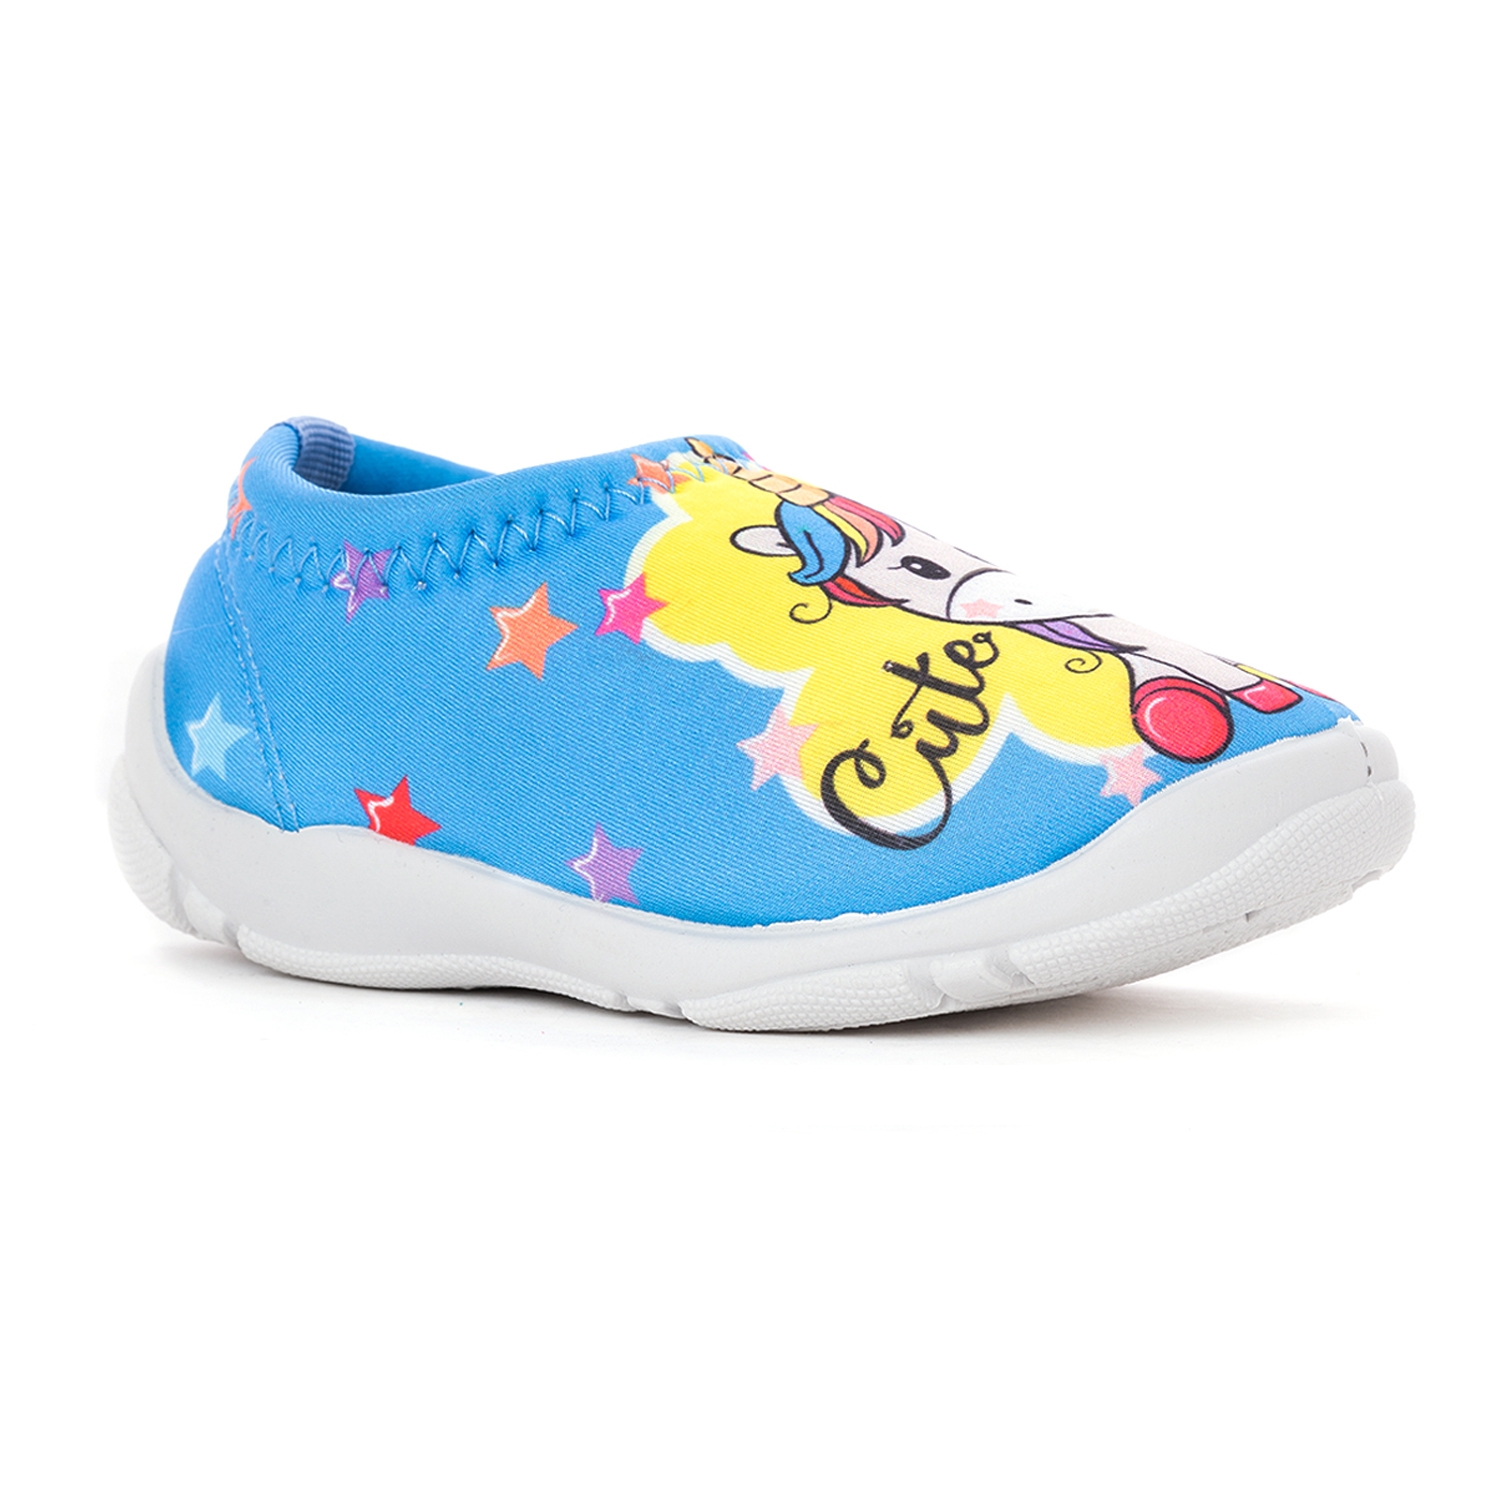 Khadim | Bonito Blue Slip On Casual Shoe for Kids